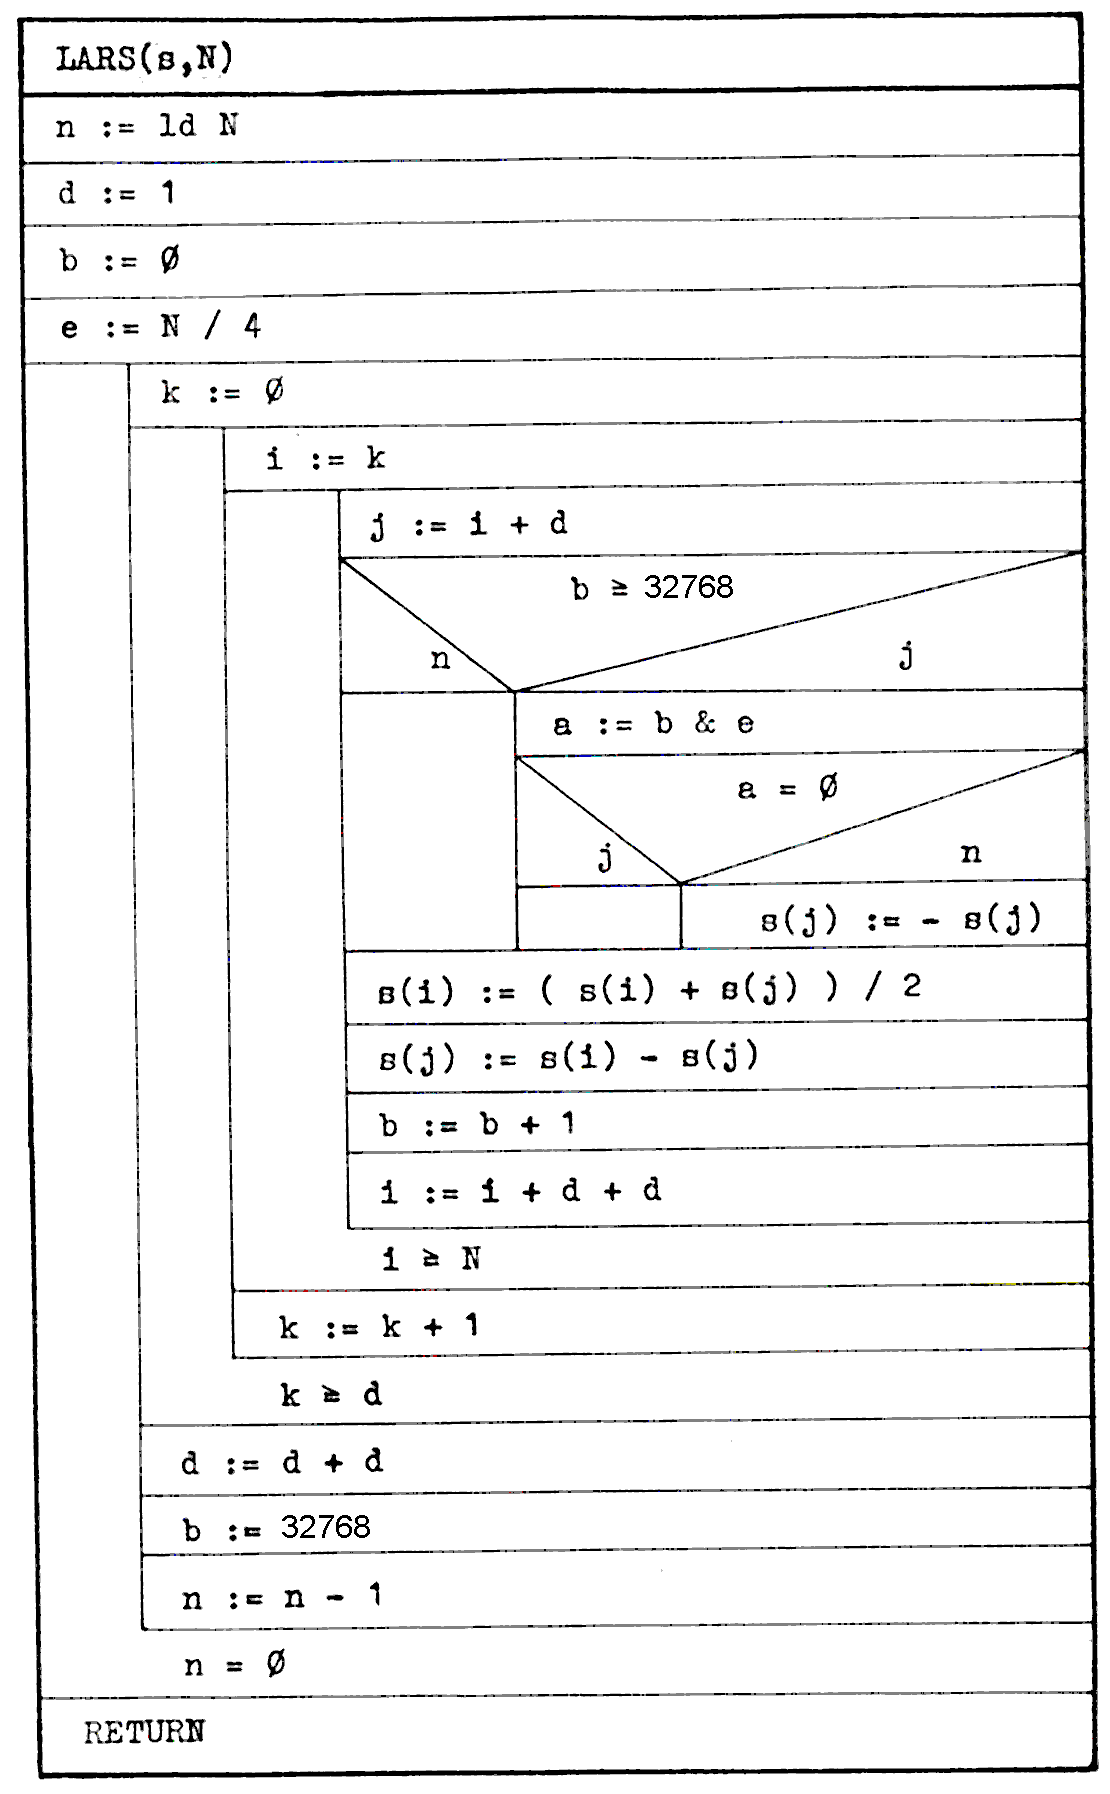 Abb. 1: Struktogramm [1]